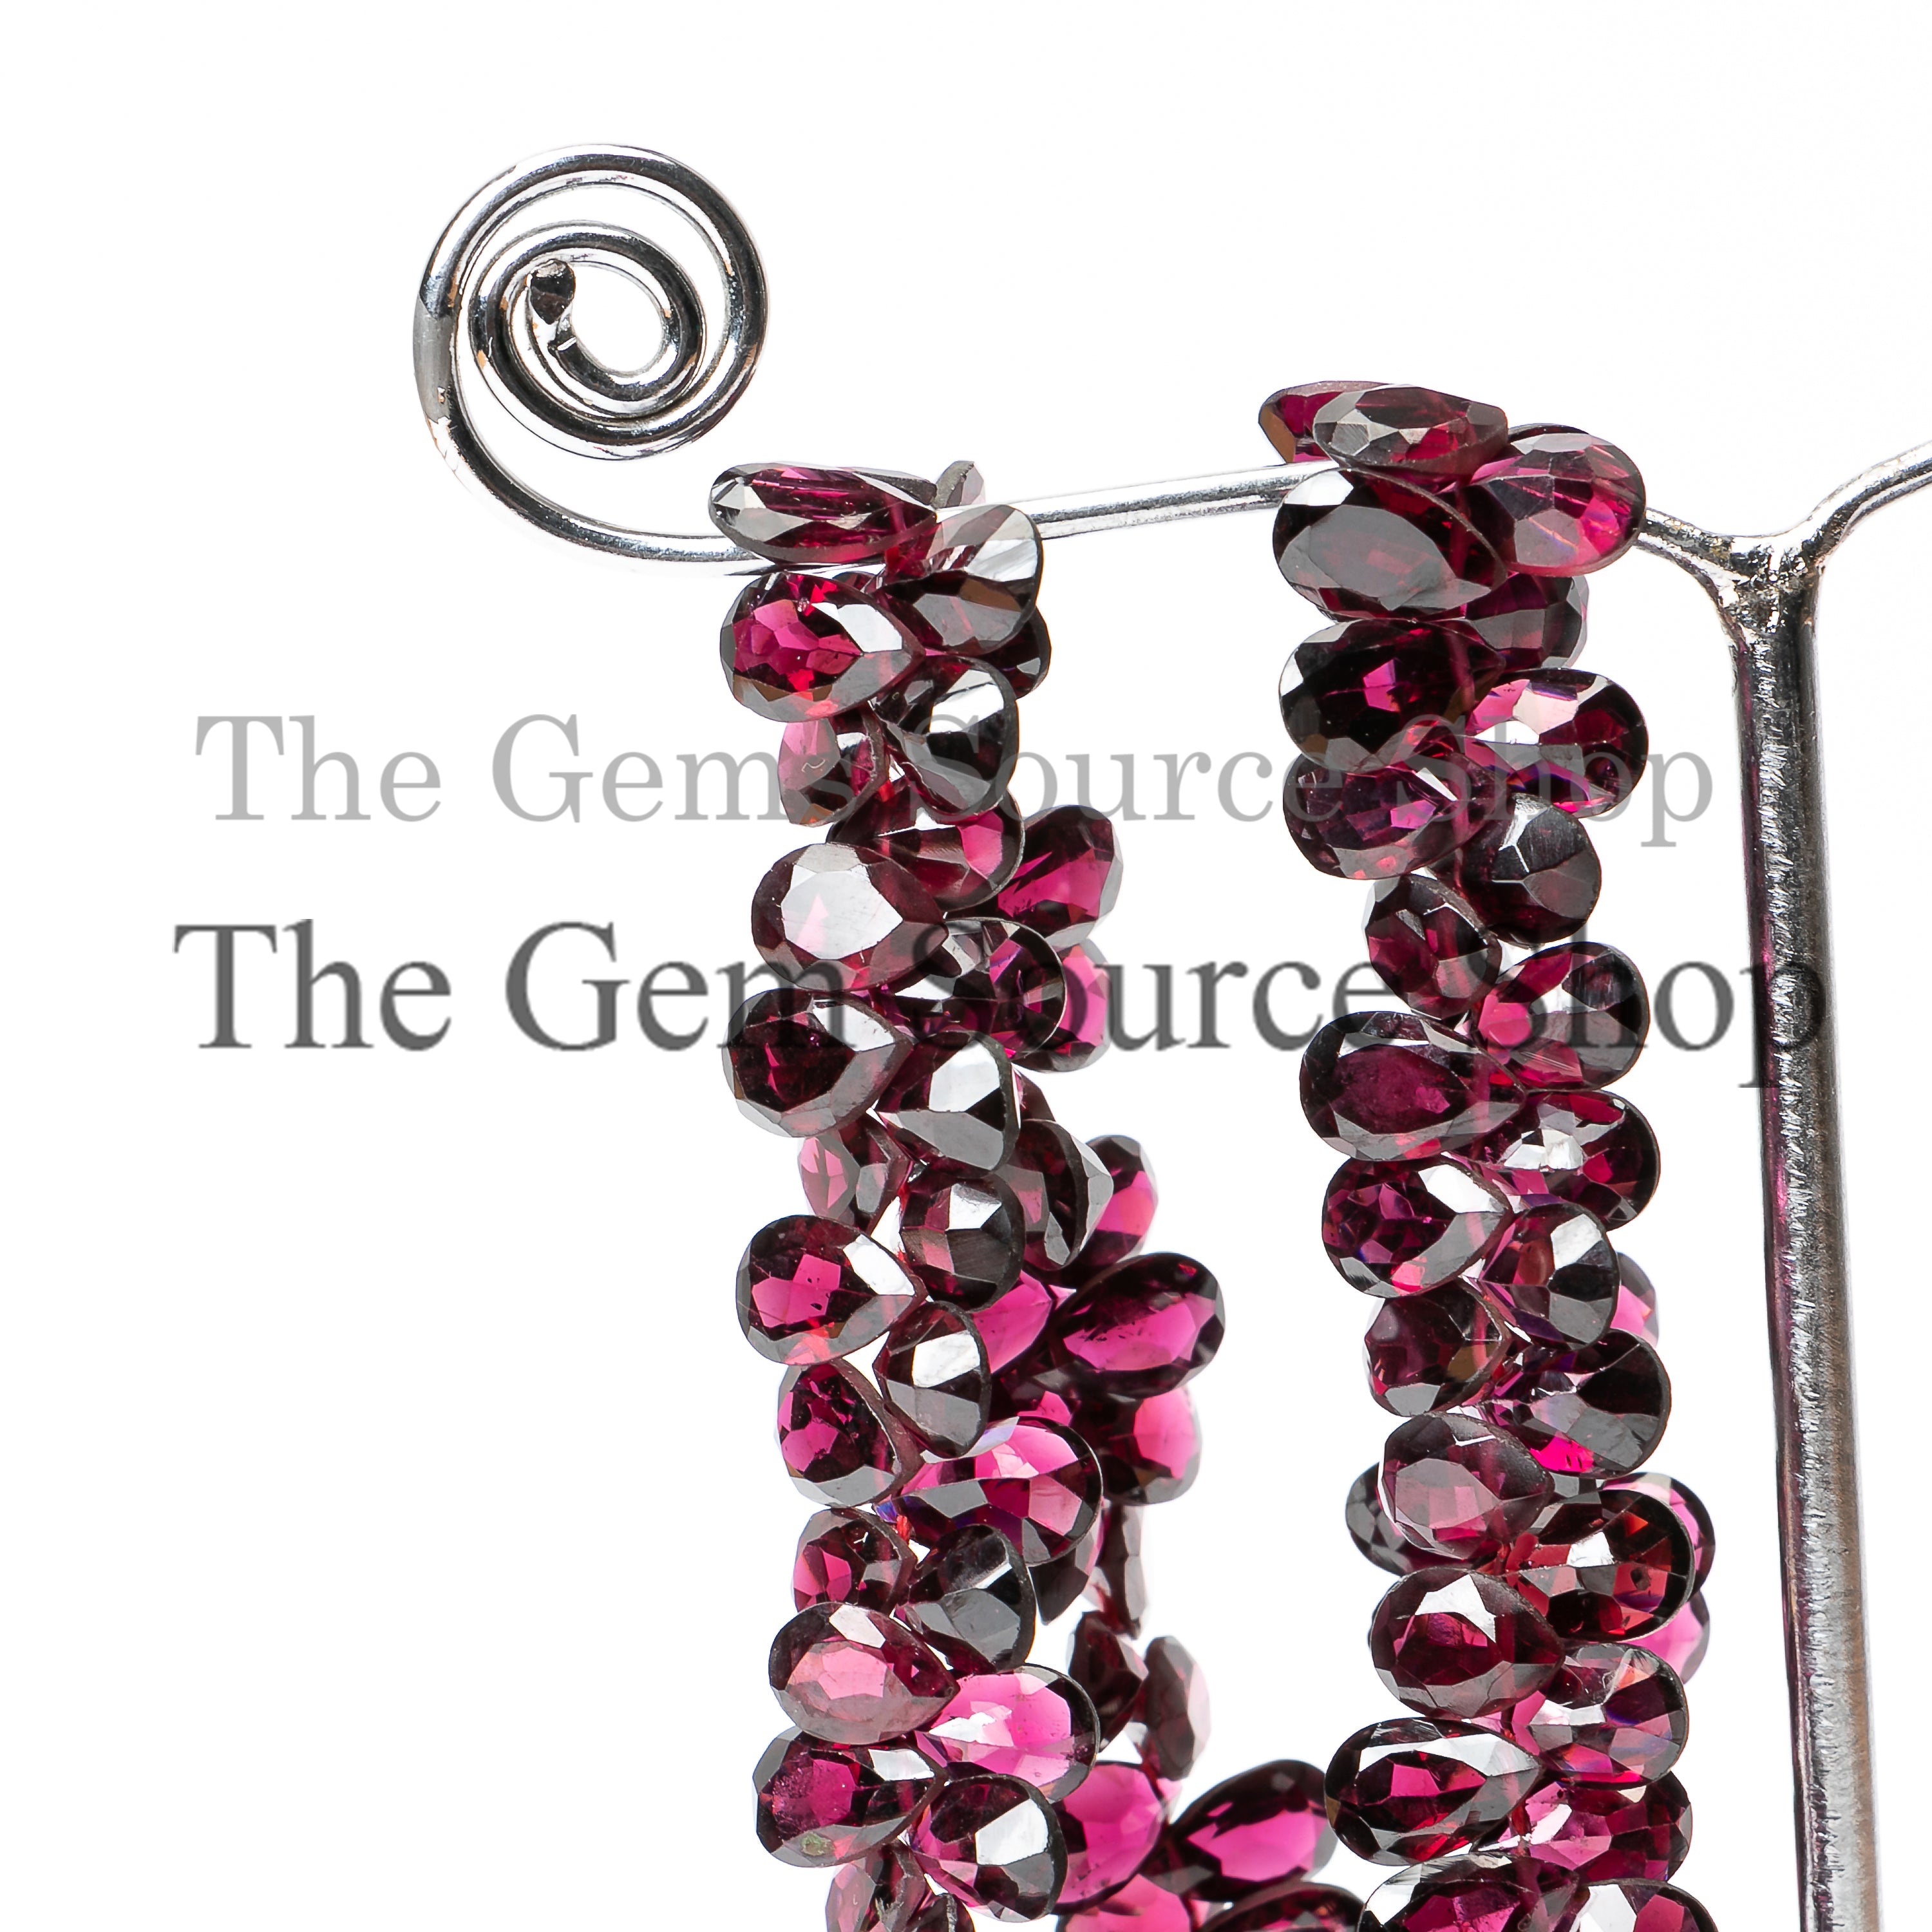 Rhodolite Garnet Faceted Briolette cut Pear Shape Beads, Rhodolite Garnet Beads, Rhodolite Garnet, Faceted Pear Shape Beads Briolette